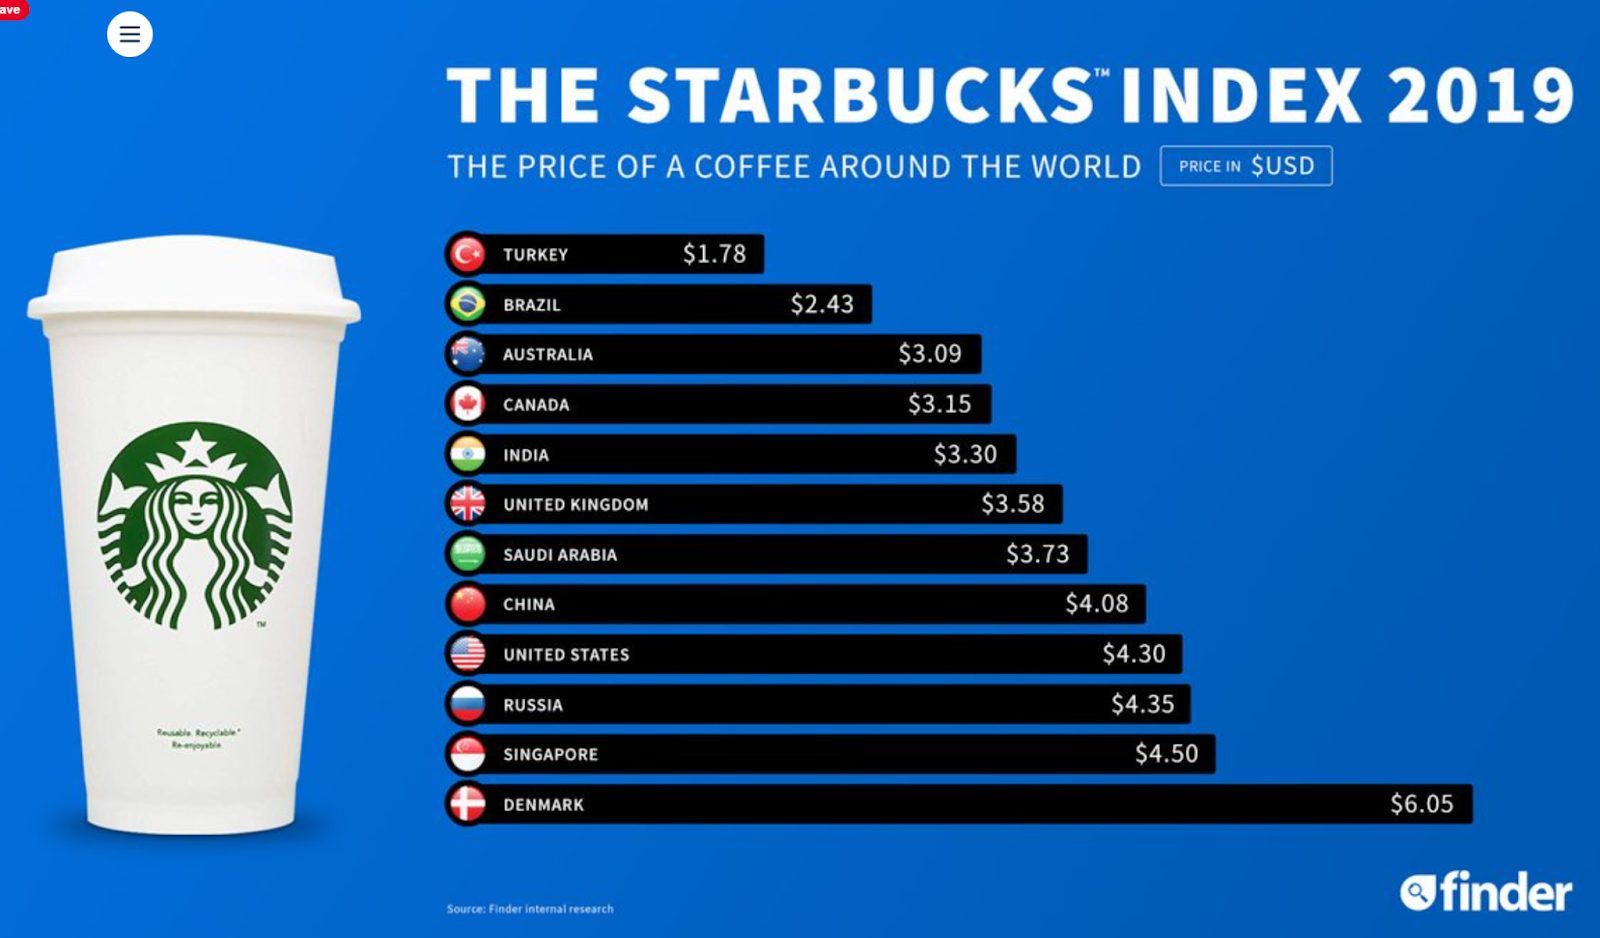 Starbucks index of 2019: prices of coffee around the world